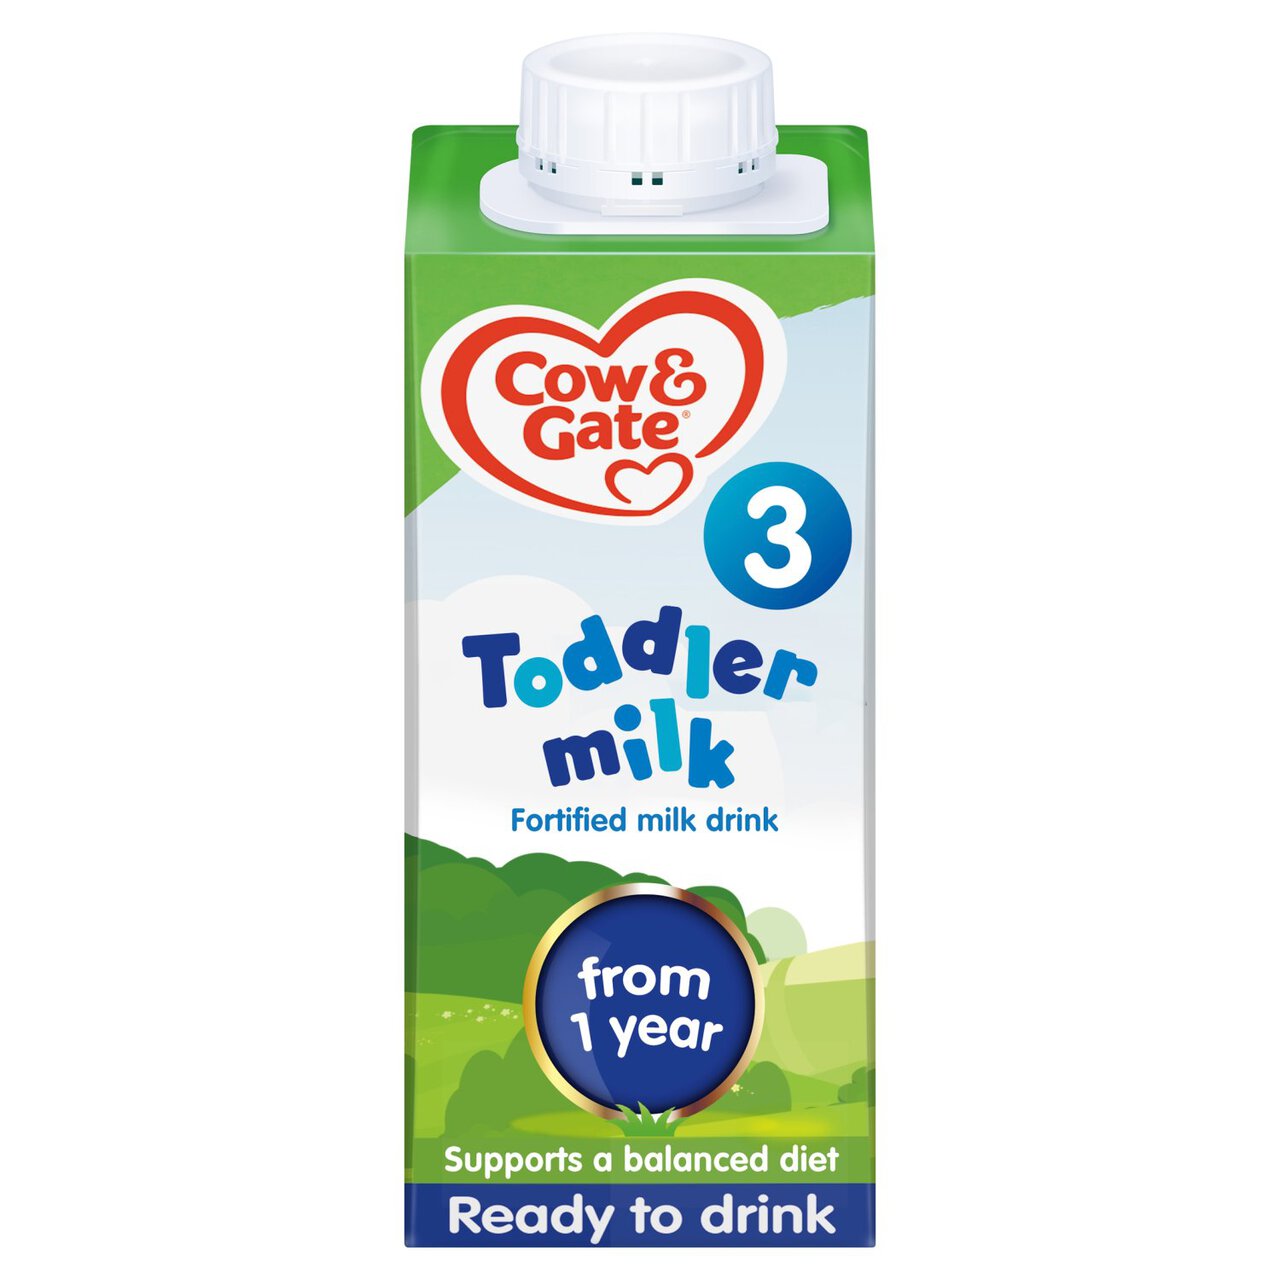 Cow & Gate 3 Toddler Milk Formula Liquid 1-3 Years 200ml